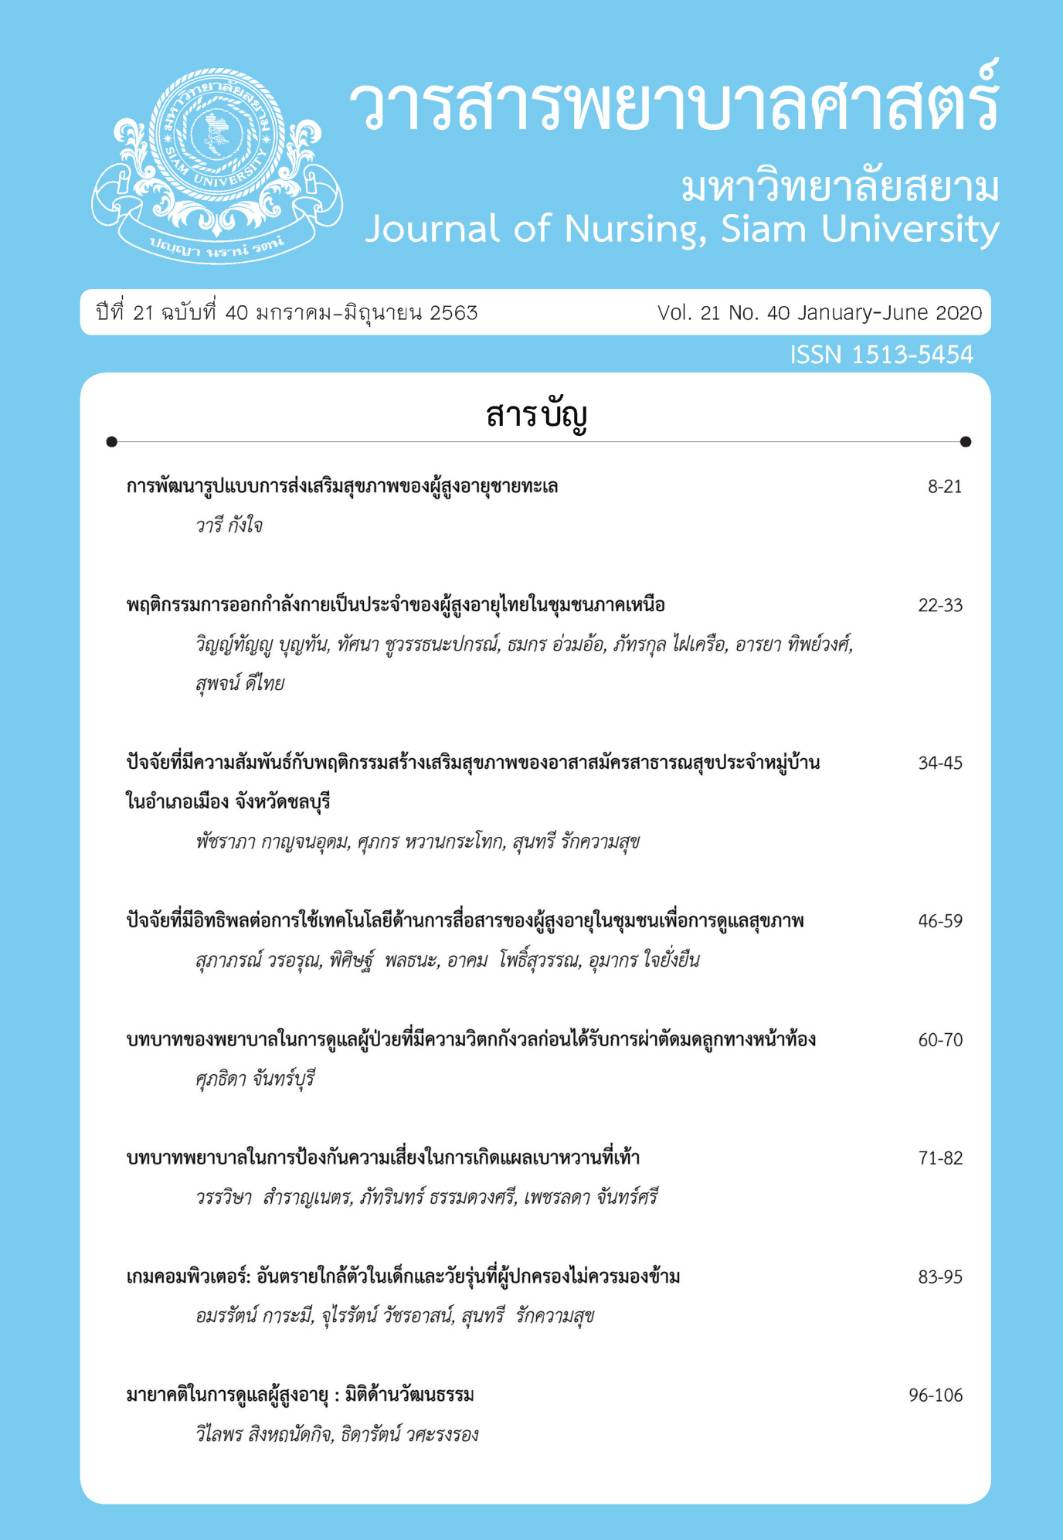 					View Vol. 21 No. 40 (2020): Journal of Nursing, Siam University (January - June)
				